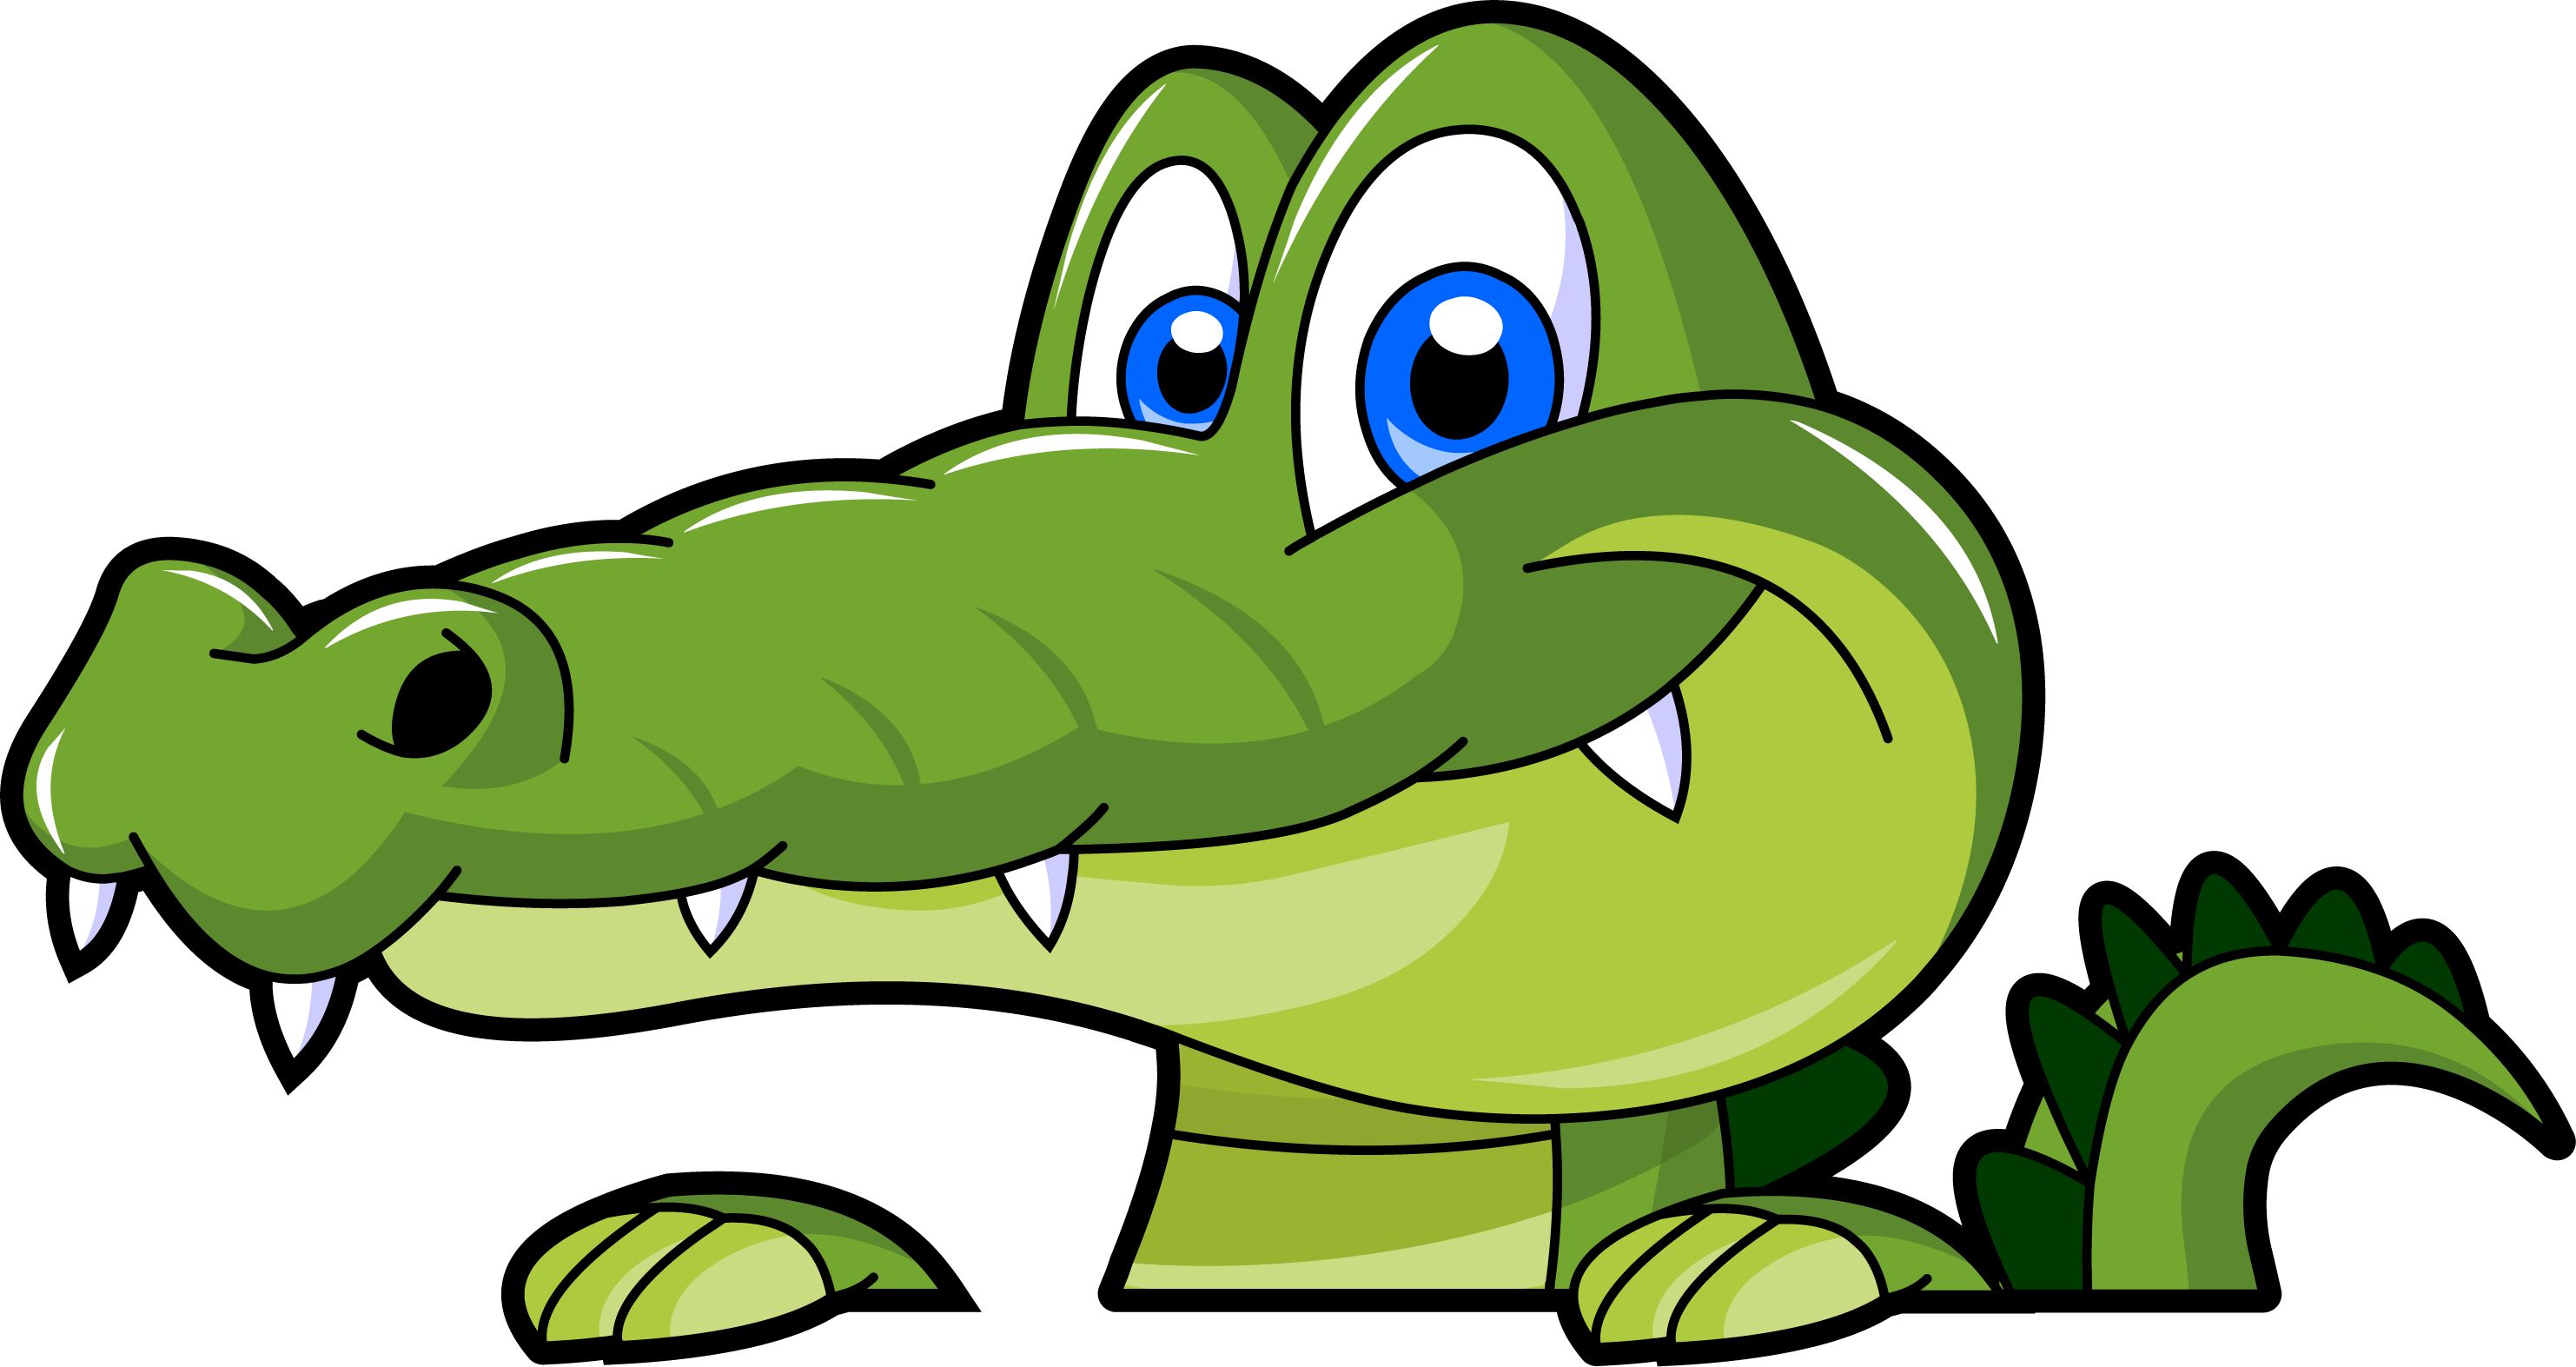 Swamp Alligator Cartoon Image Download Png Clipart